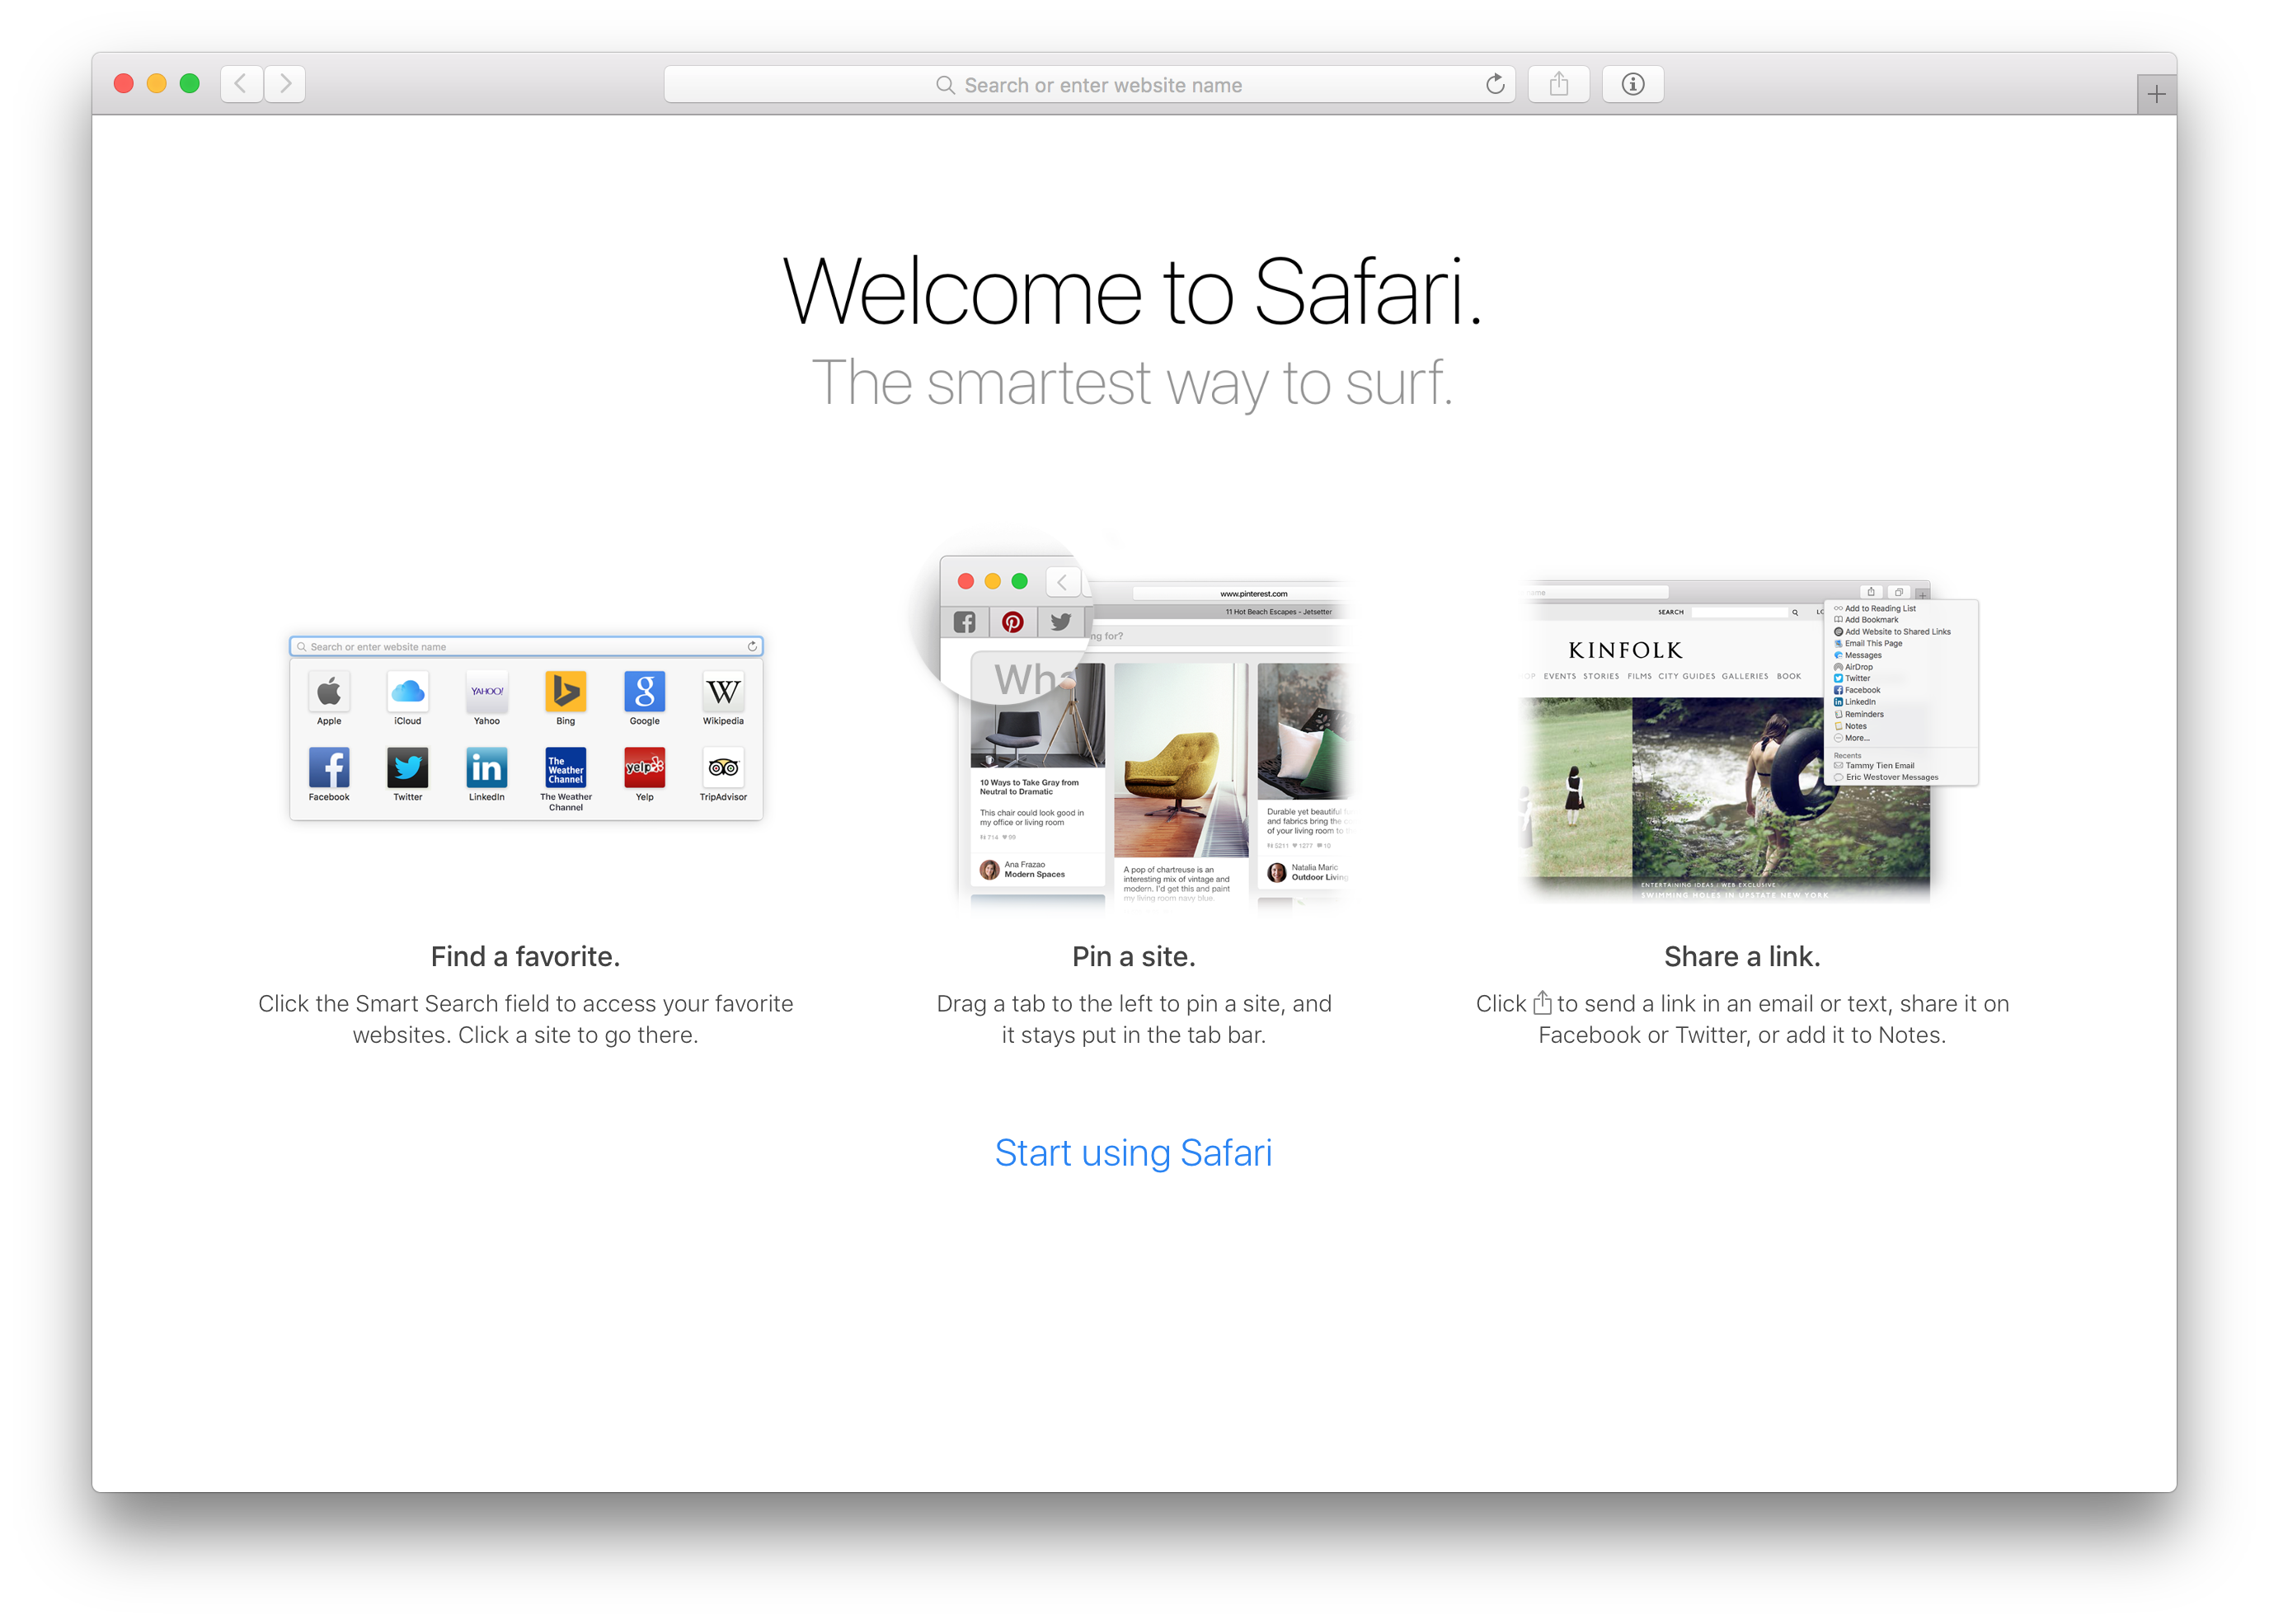 Ekran powitalny systemu OS X El Capitan 10.11 Safari